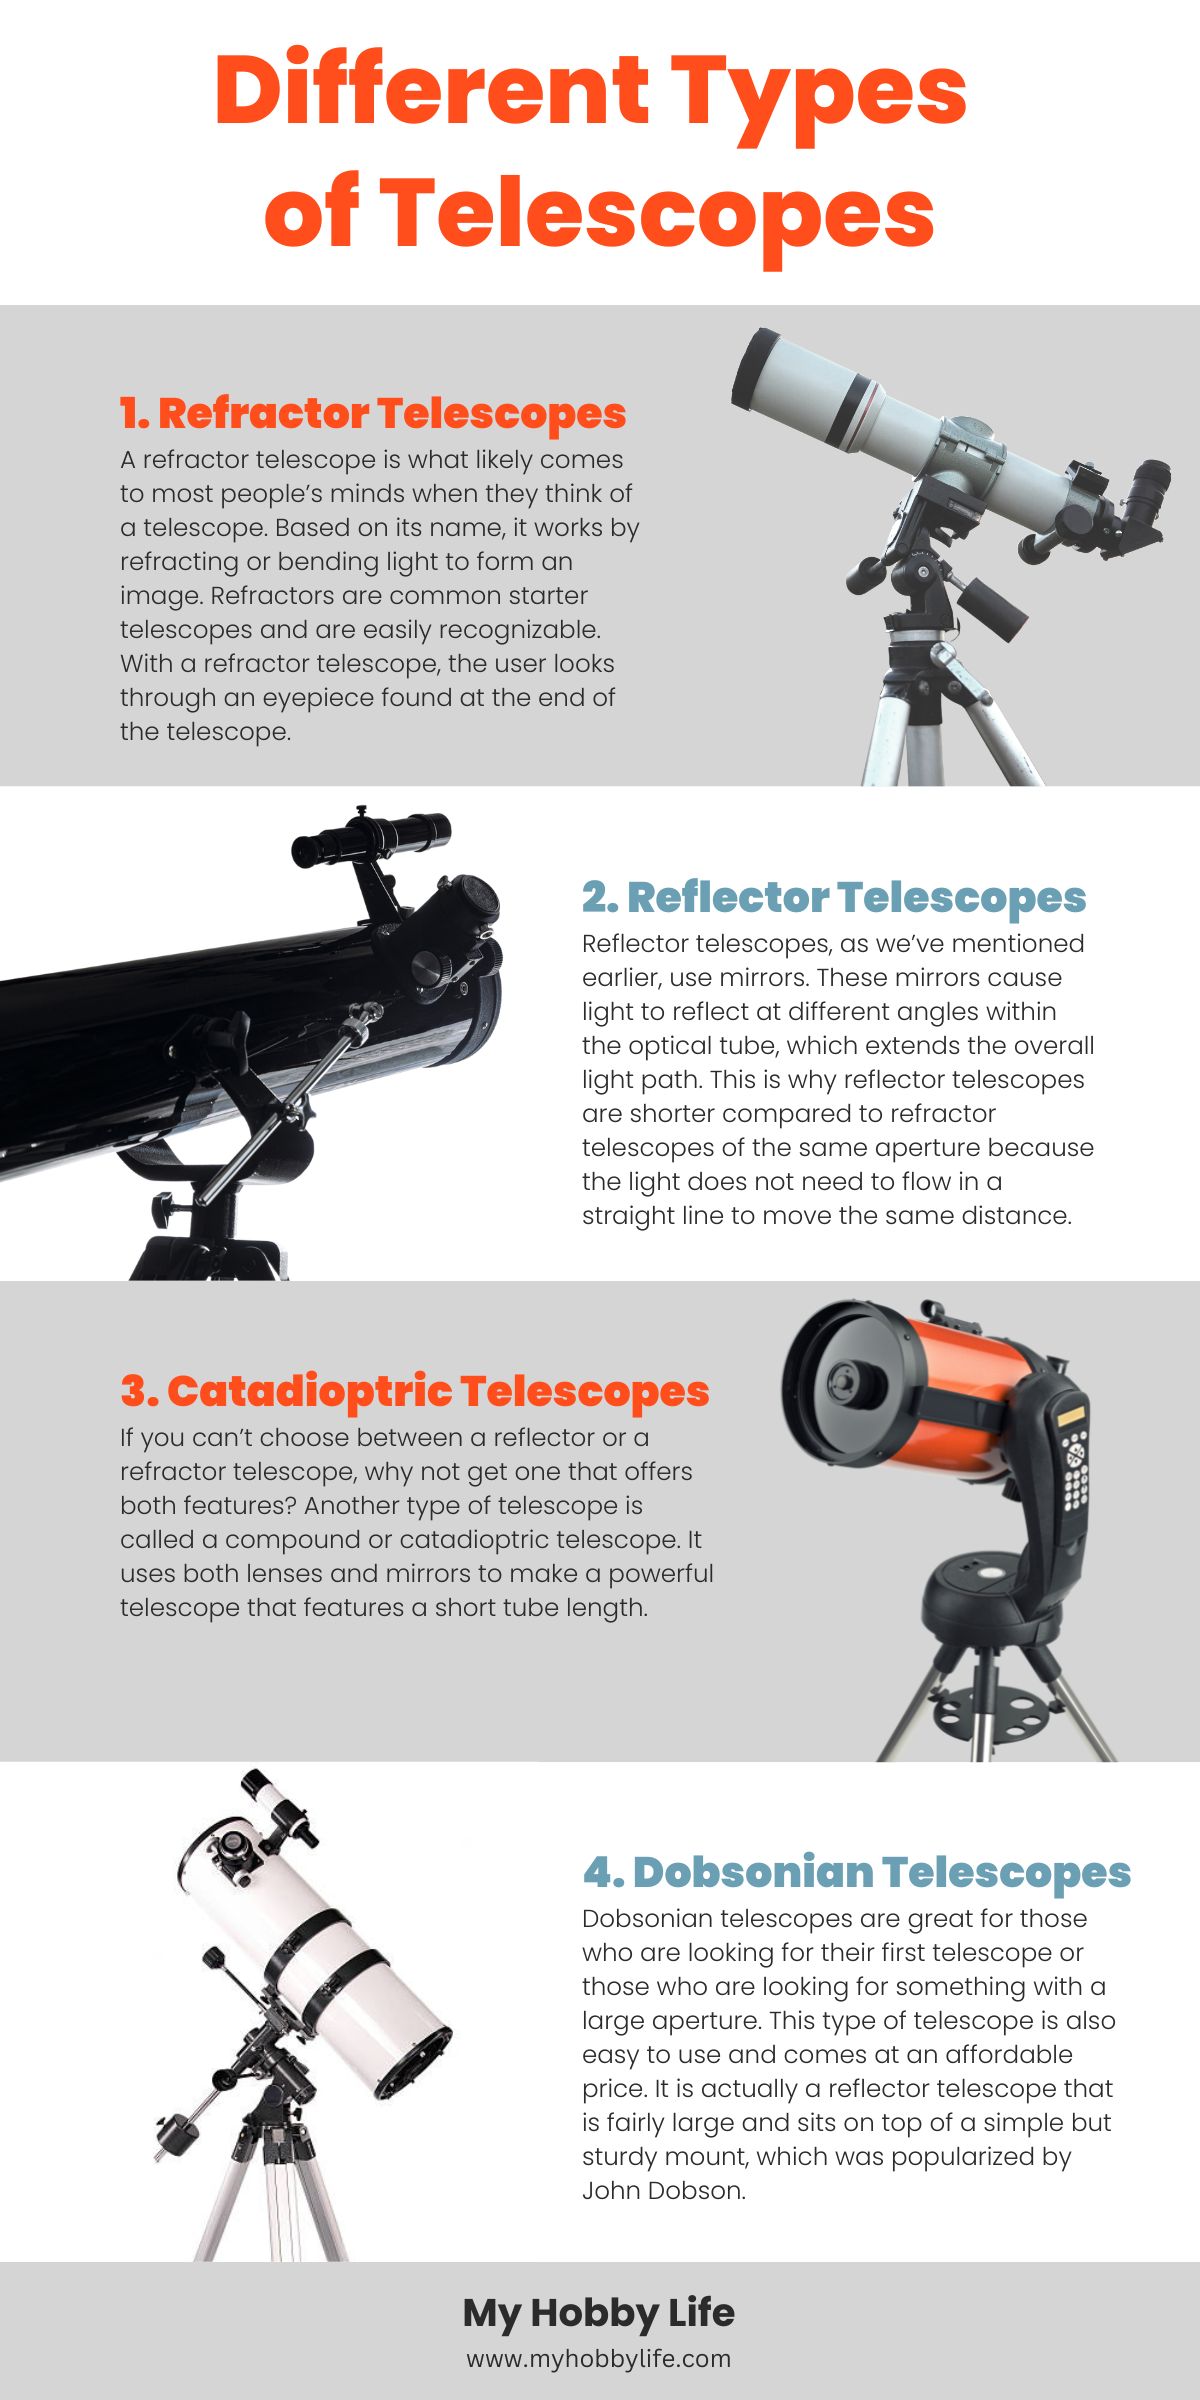 Different Types of Telescopes